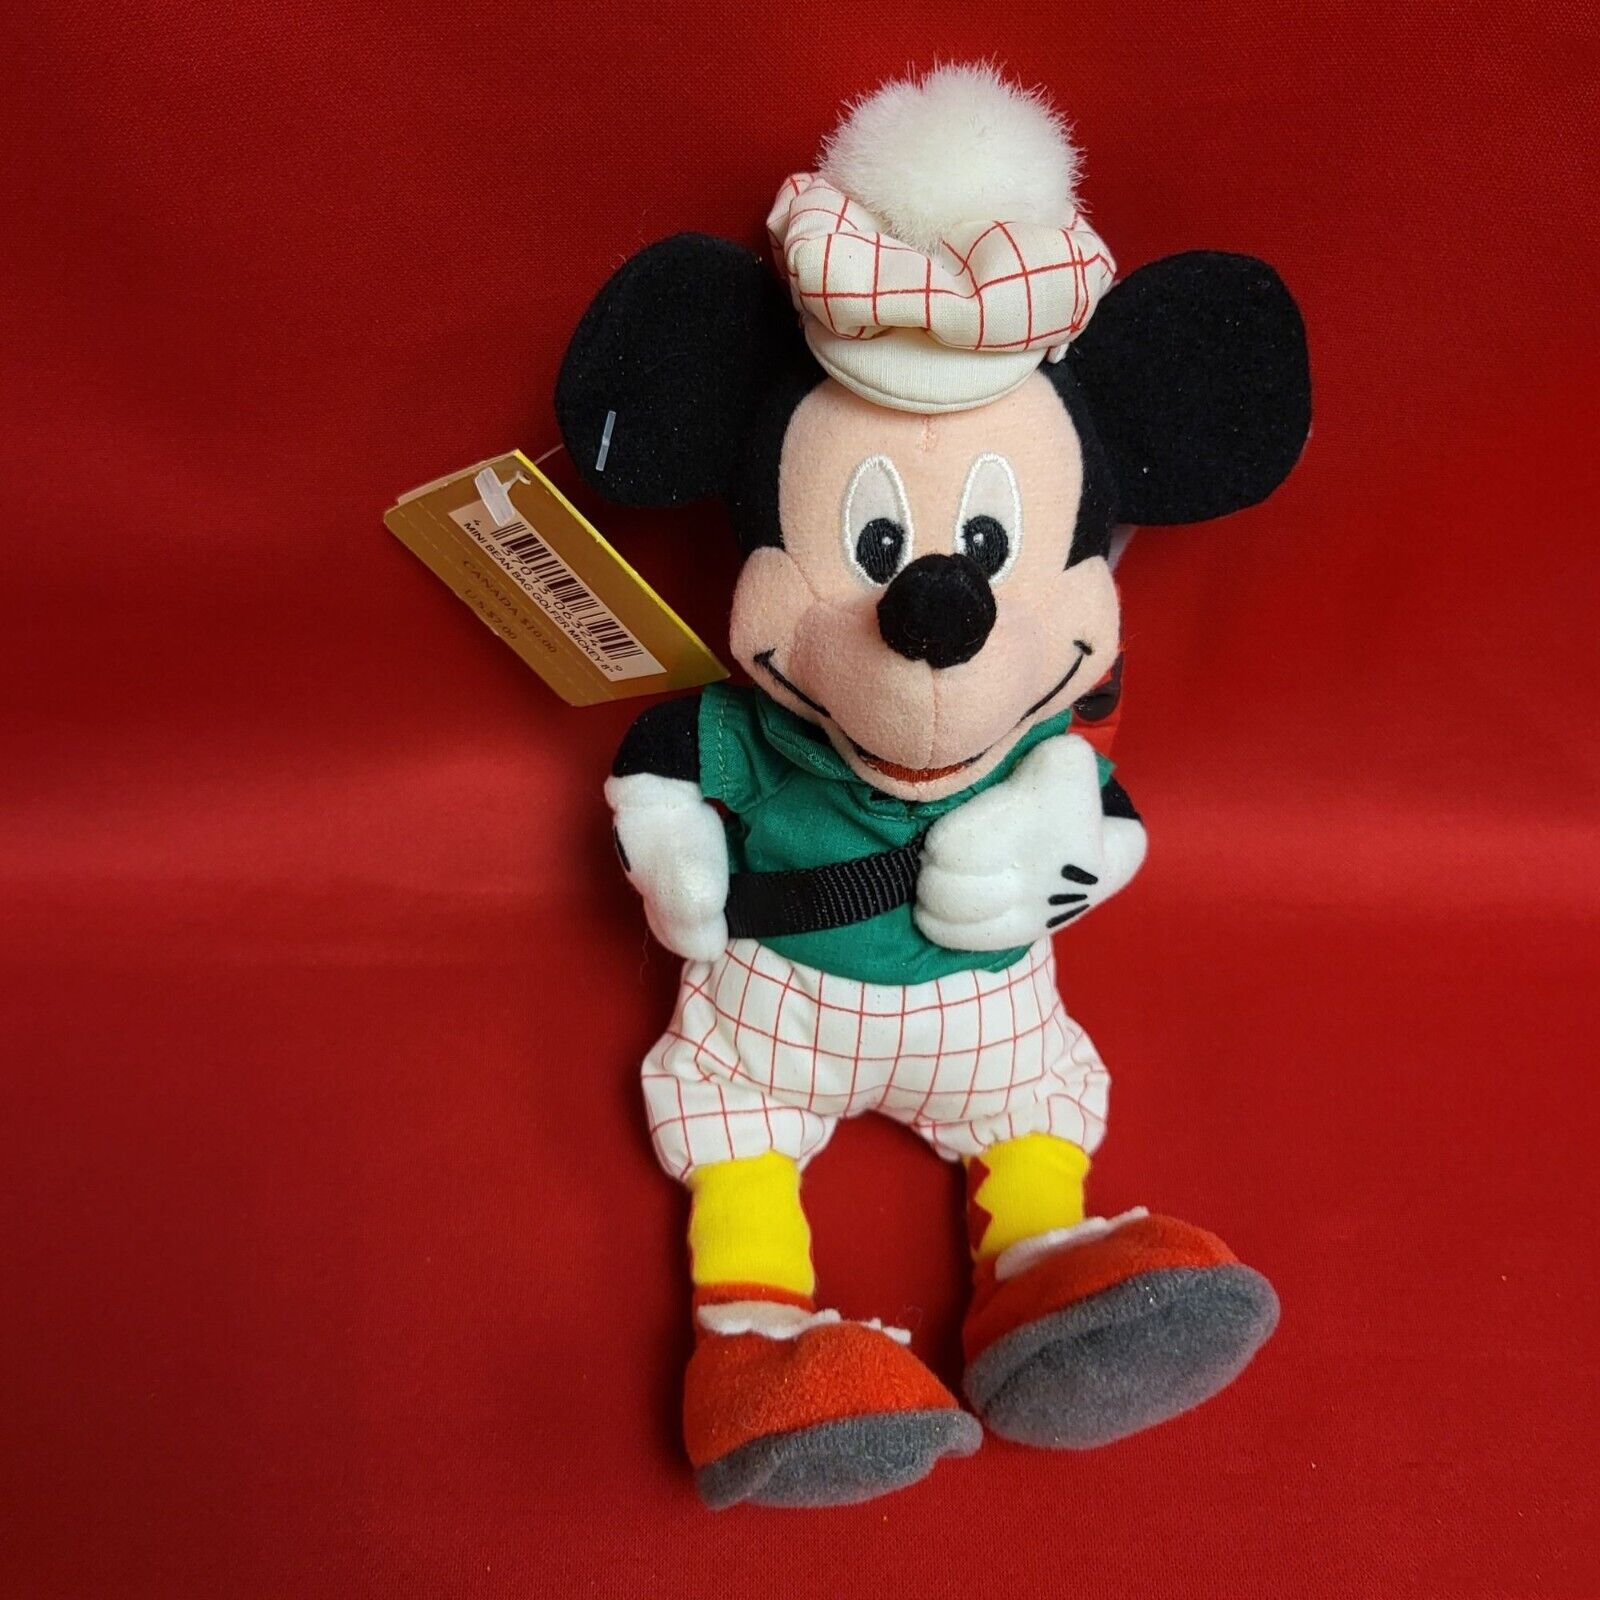 Golfer Mickey Mouse Plush Bean Bag Beanies Disneyland Stuff Toy